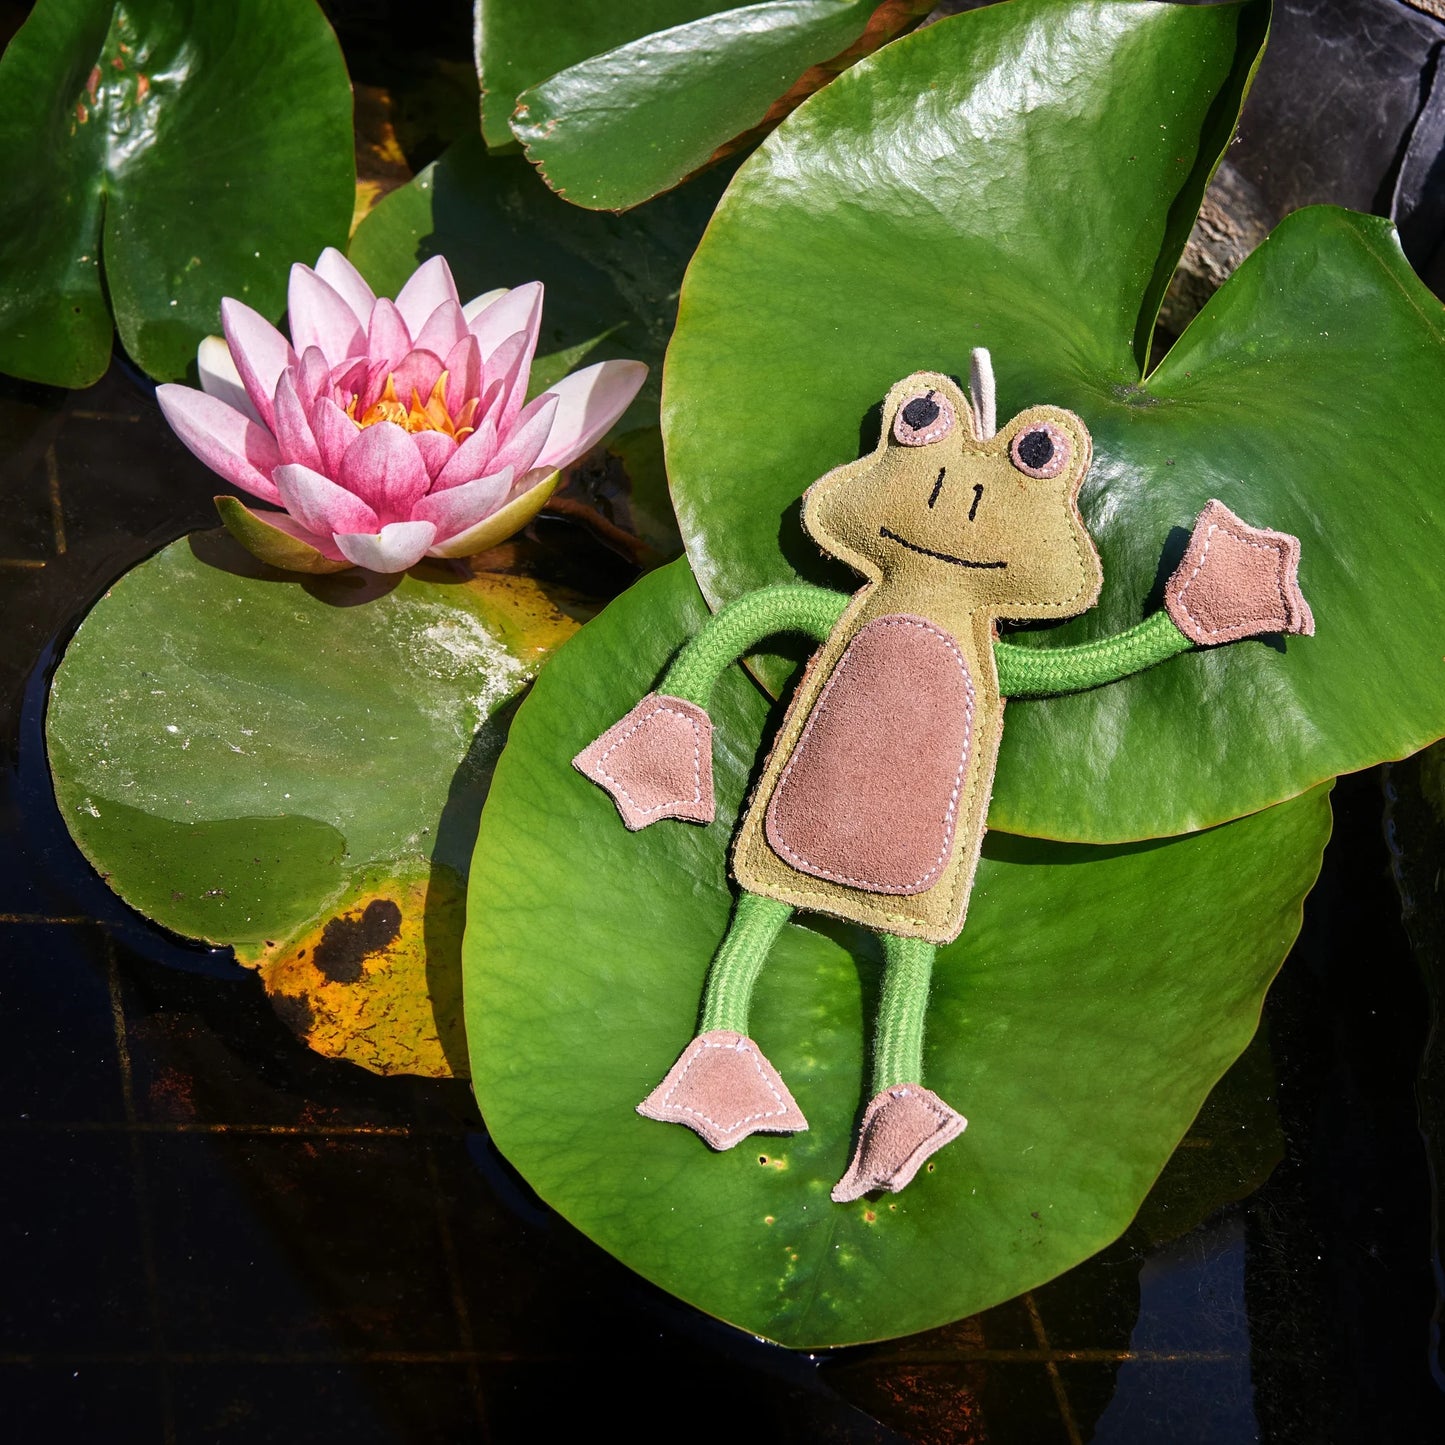 Eco Toy - Francois Le Frog